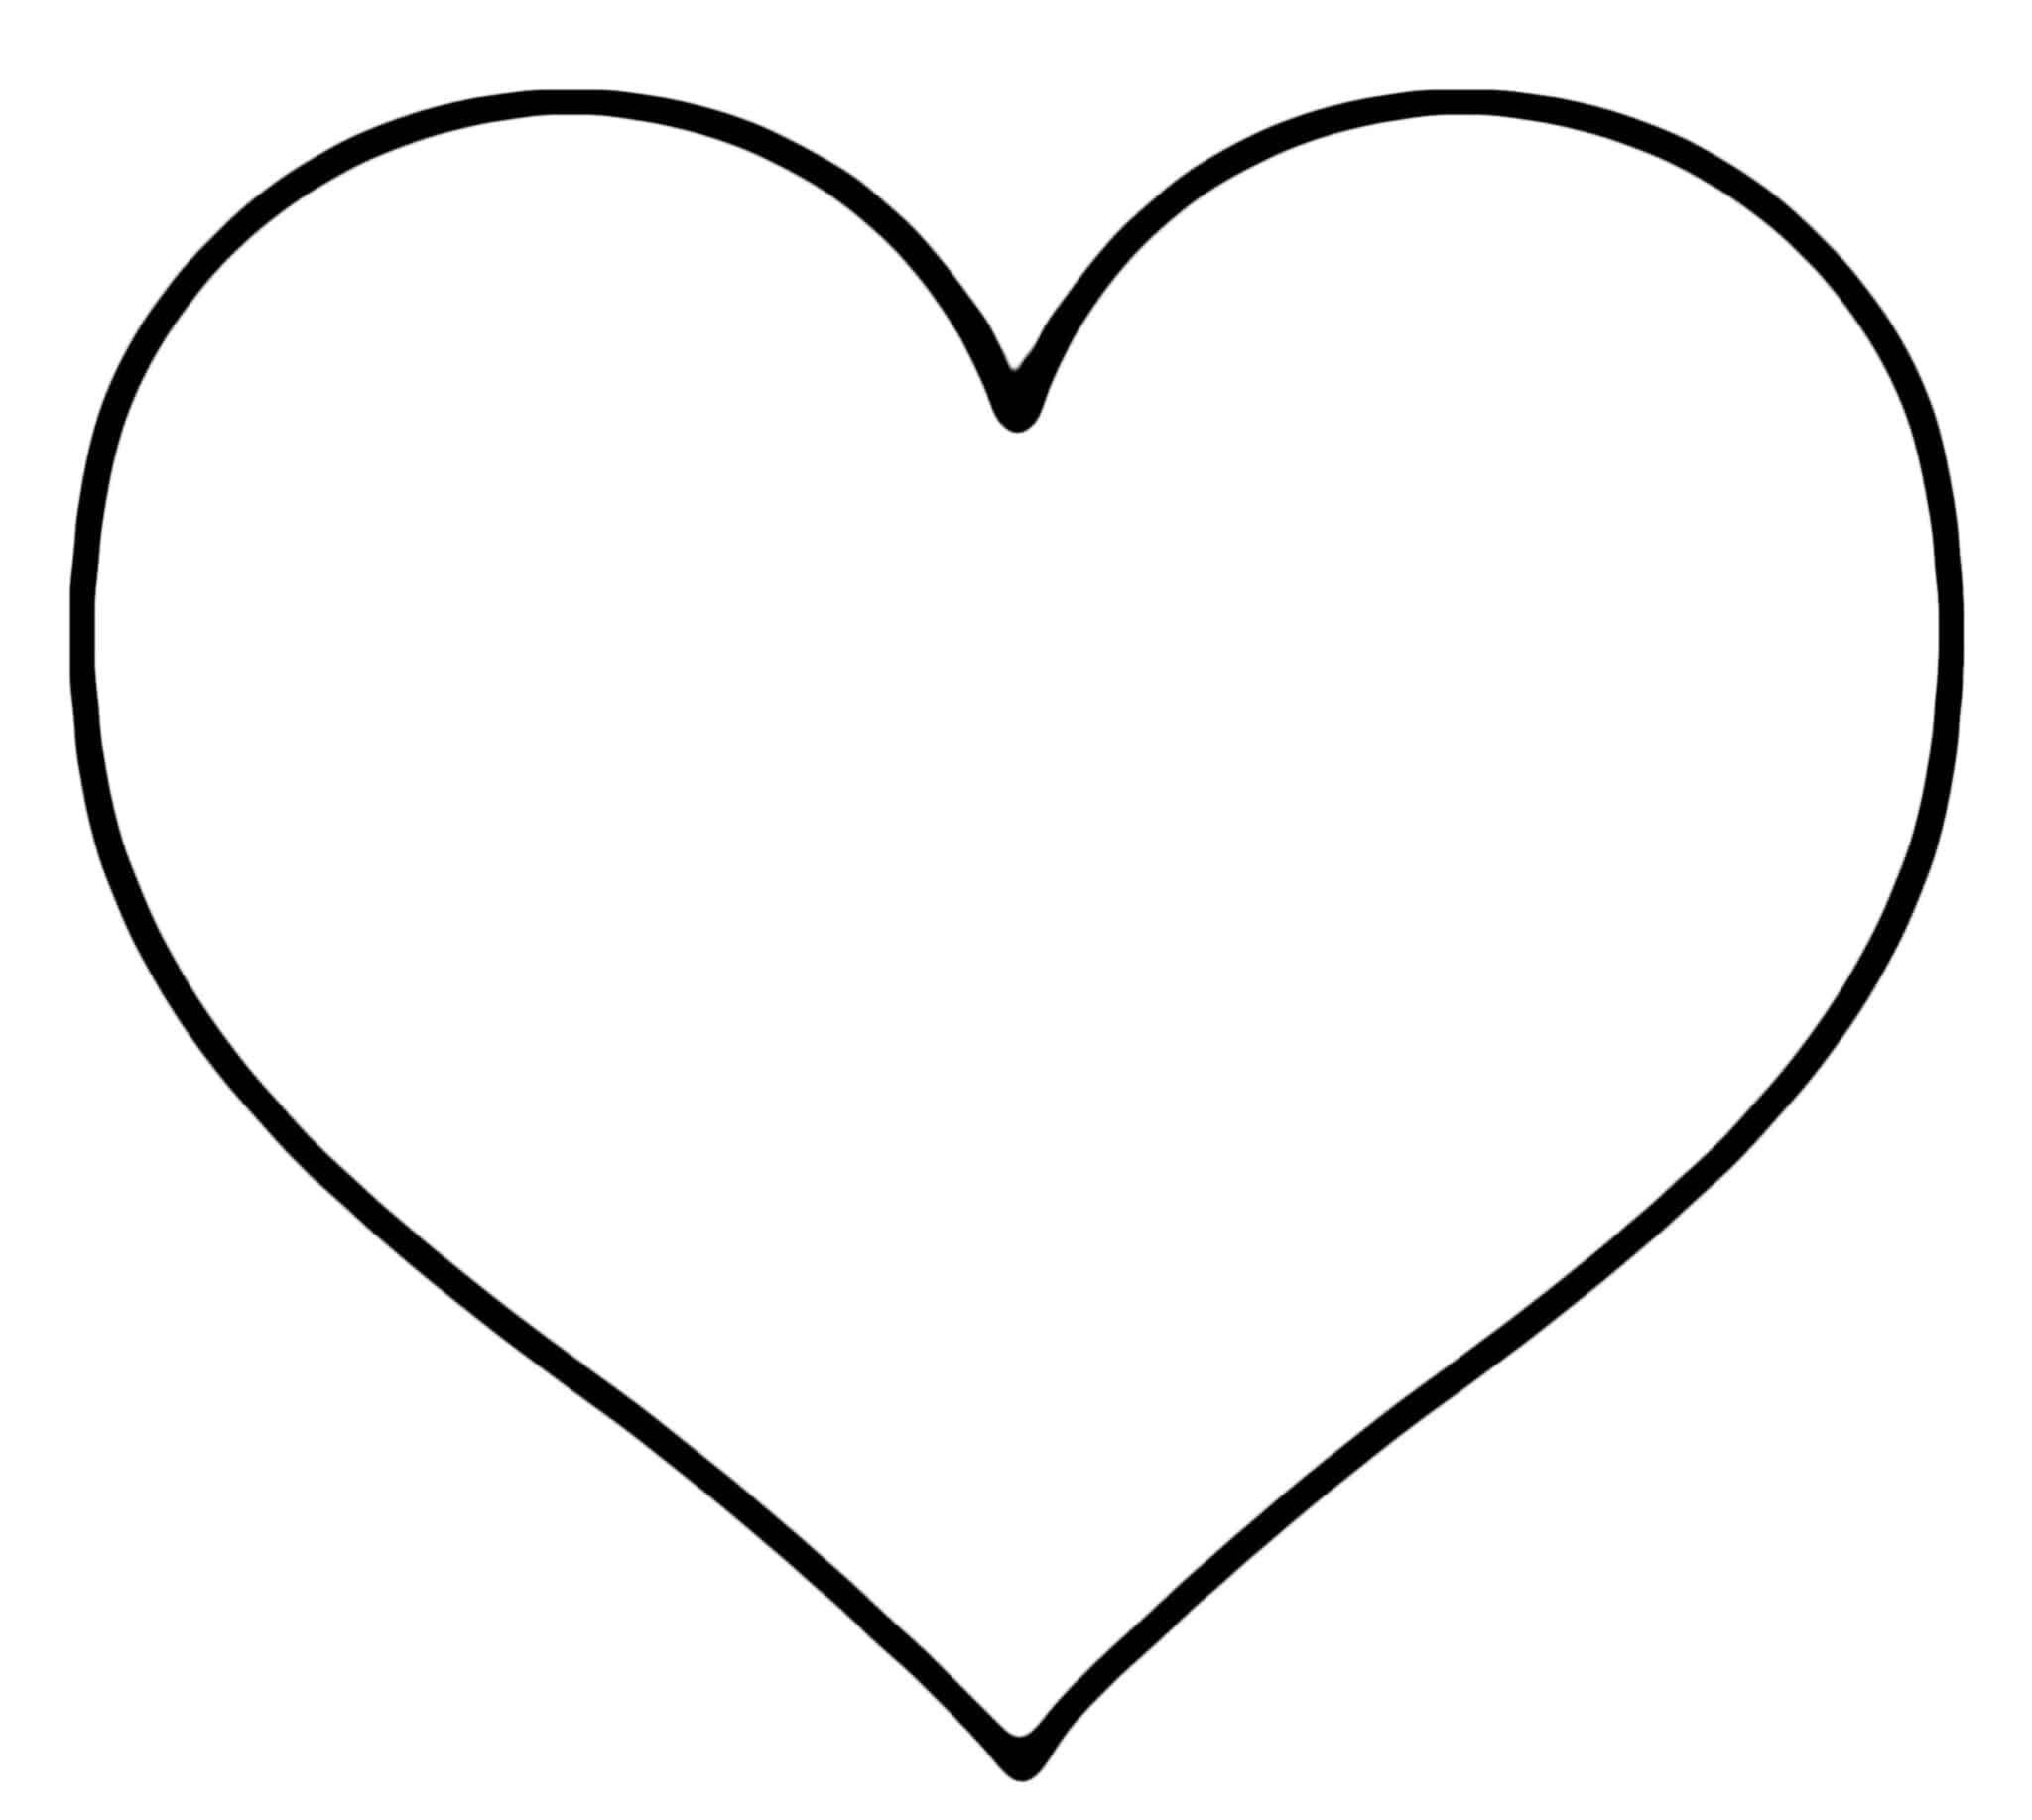 pin-by-kiahna-sanders-on-life-printable-heart-template-heart-shapes-6